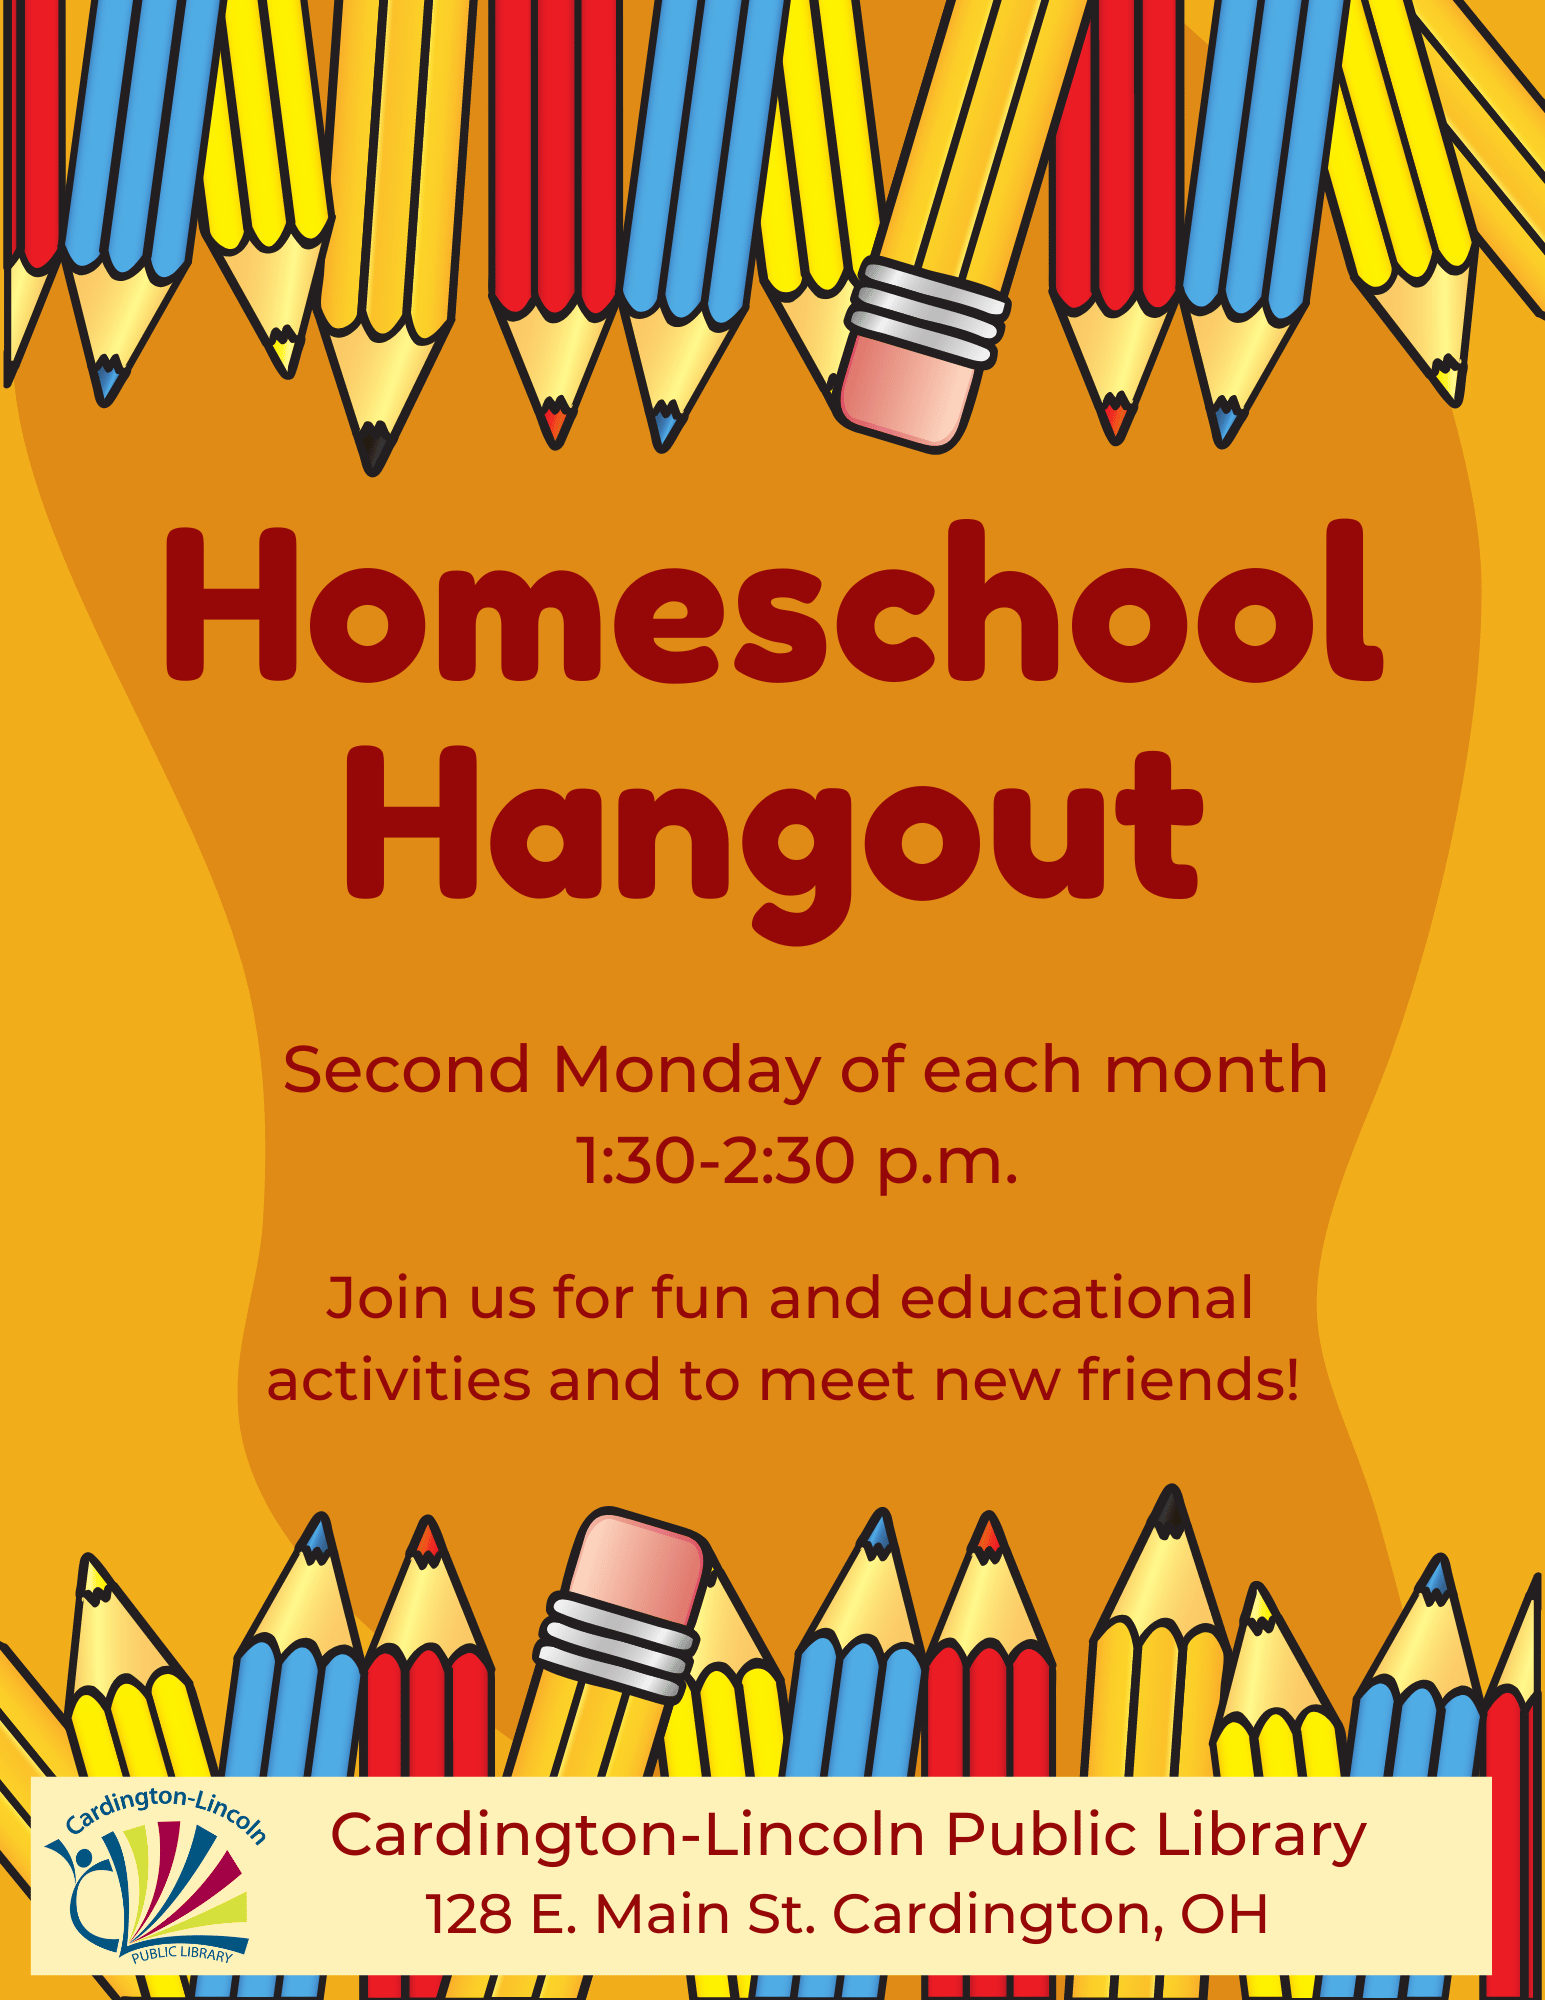 homeschool hangout 1:00-2:30 second monday of each month